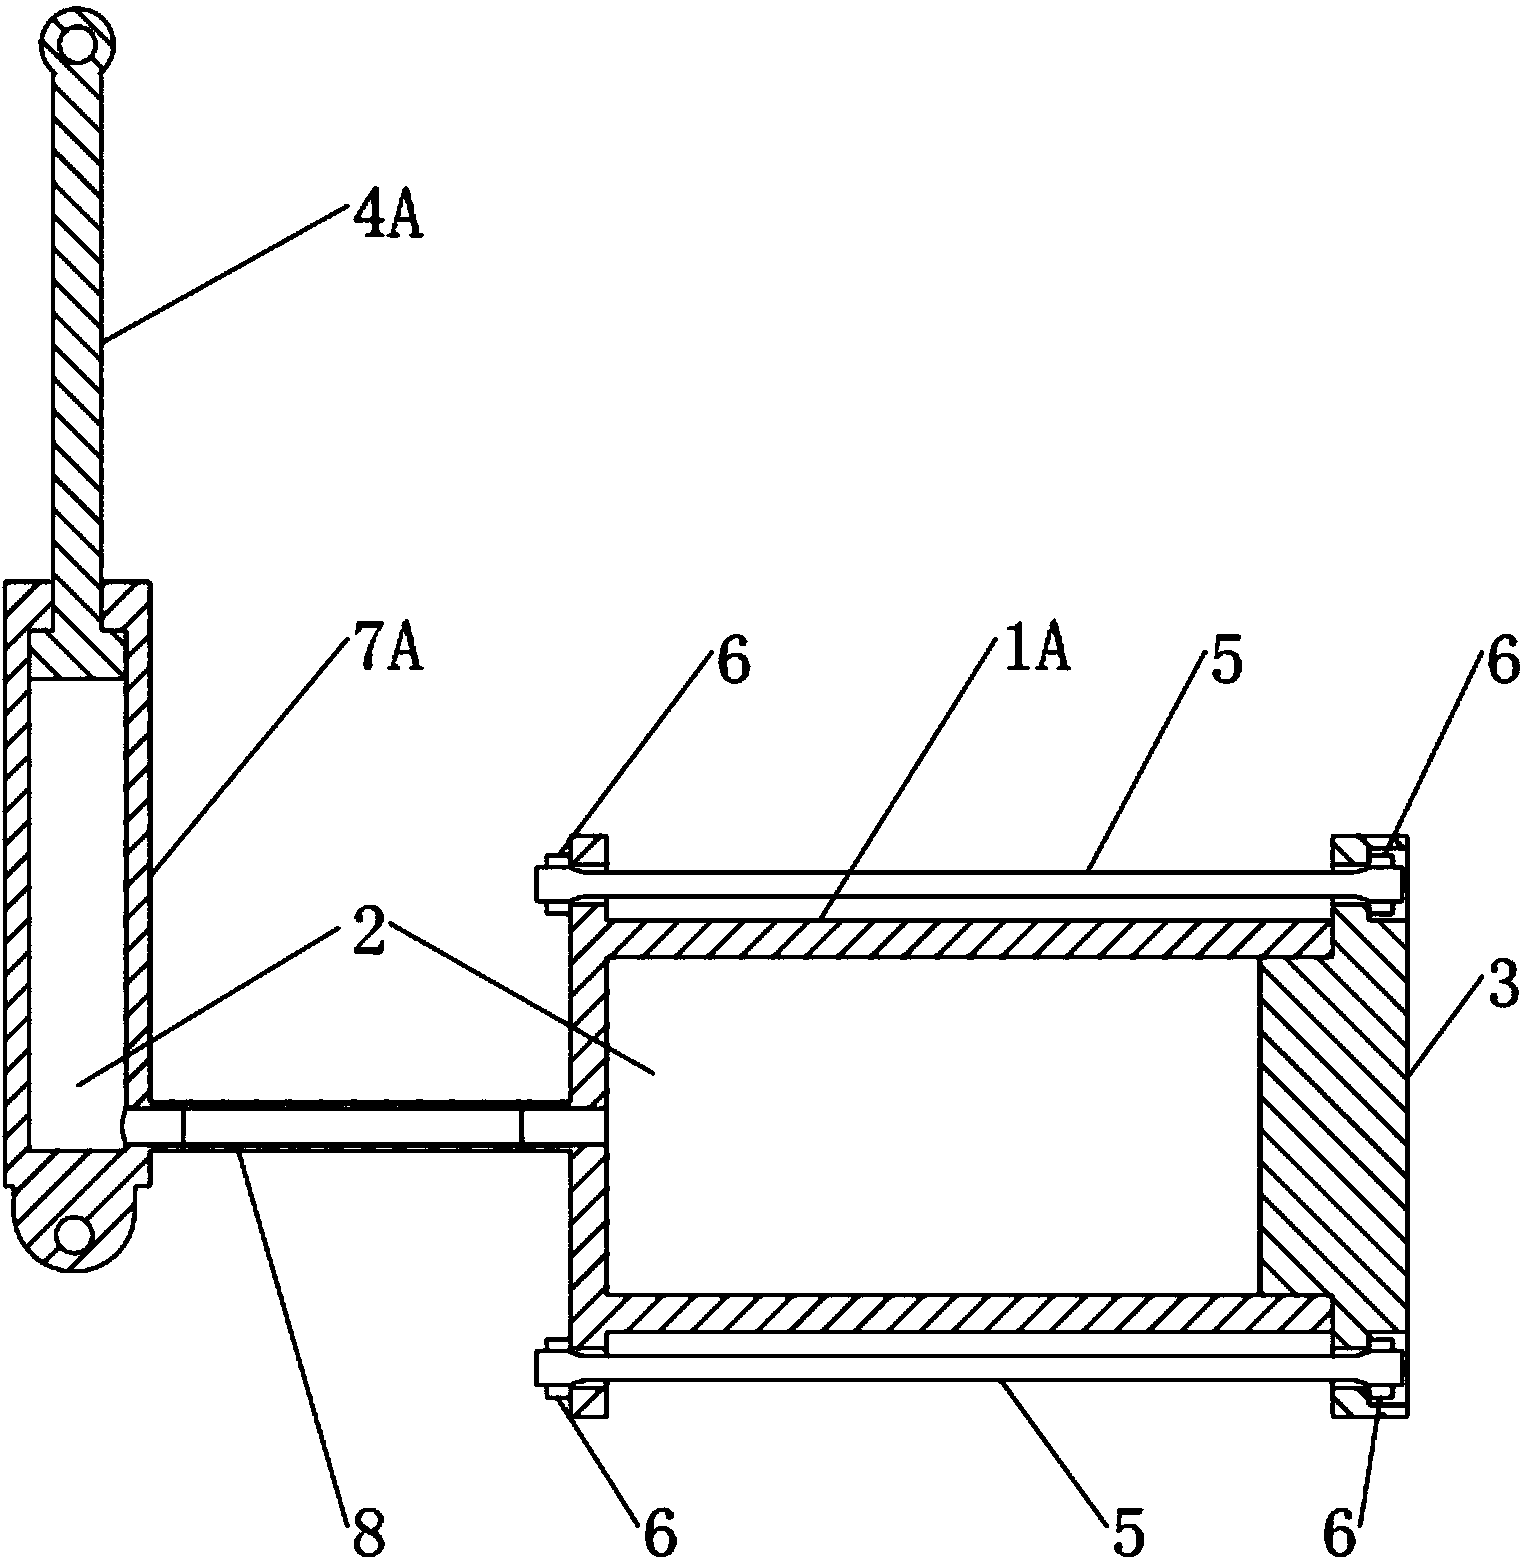 Hydraulic buffering device using shape memory alloy